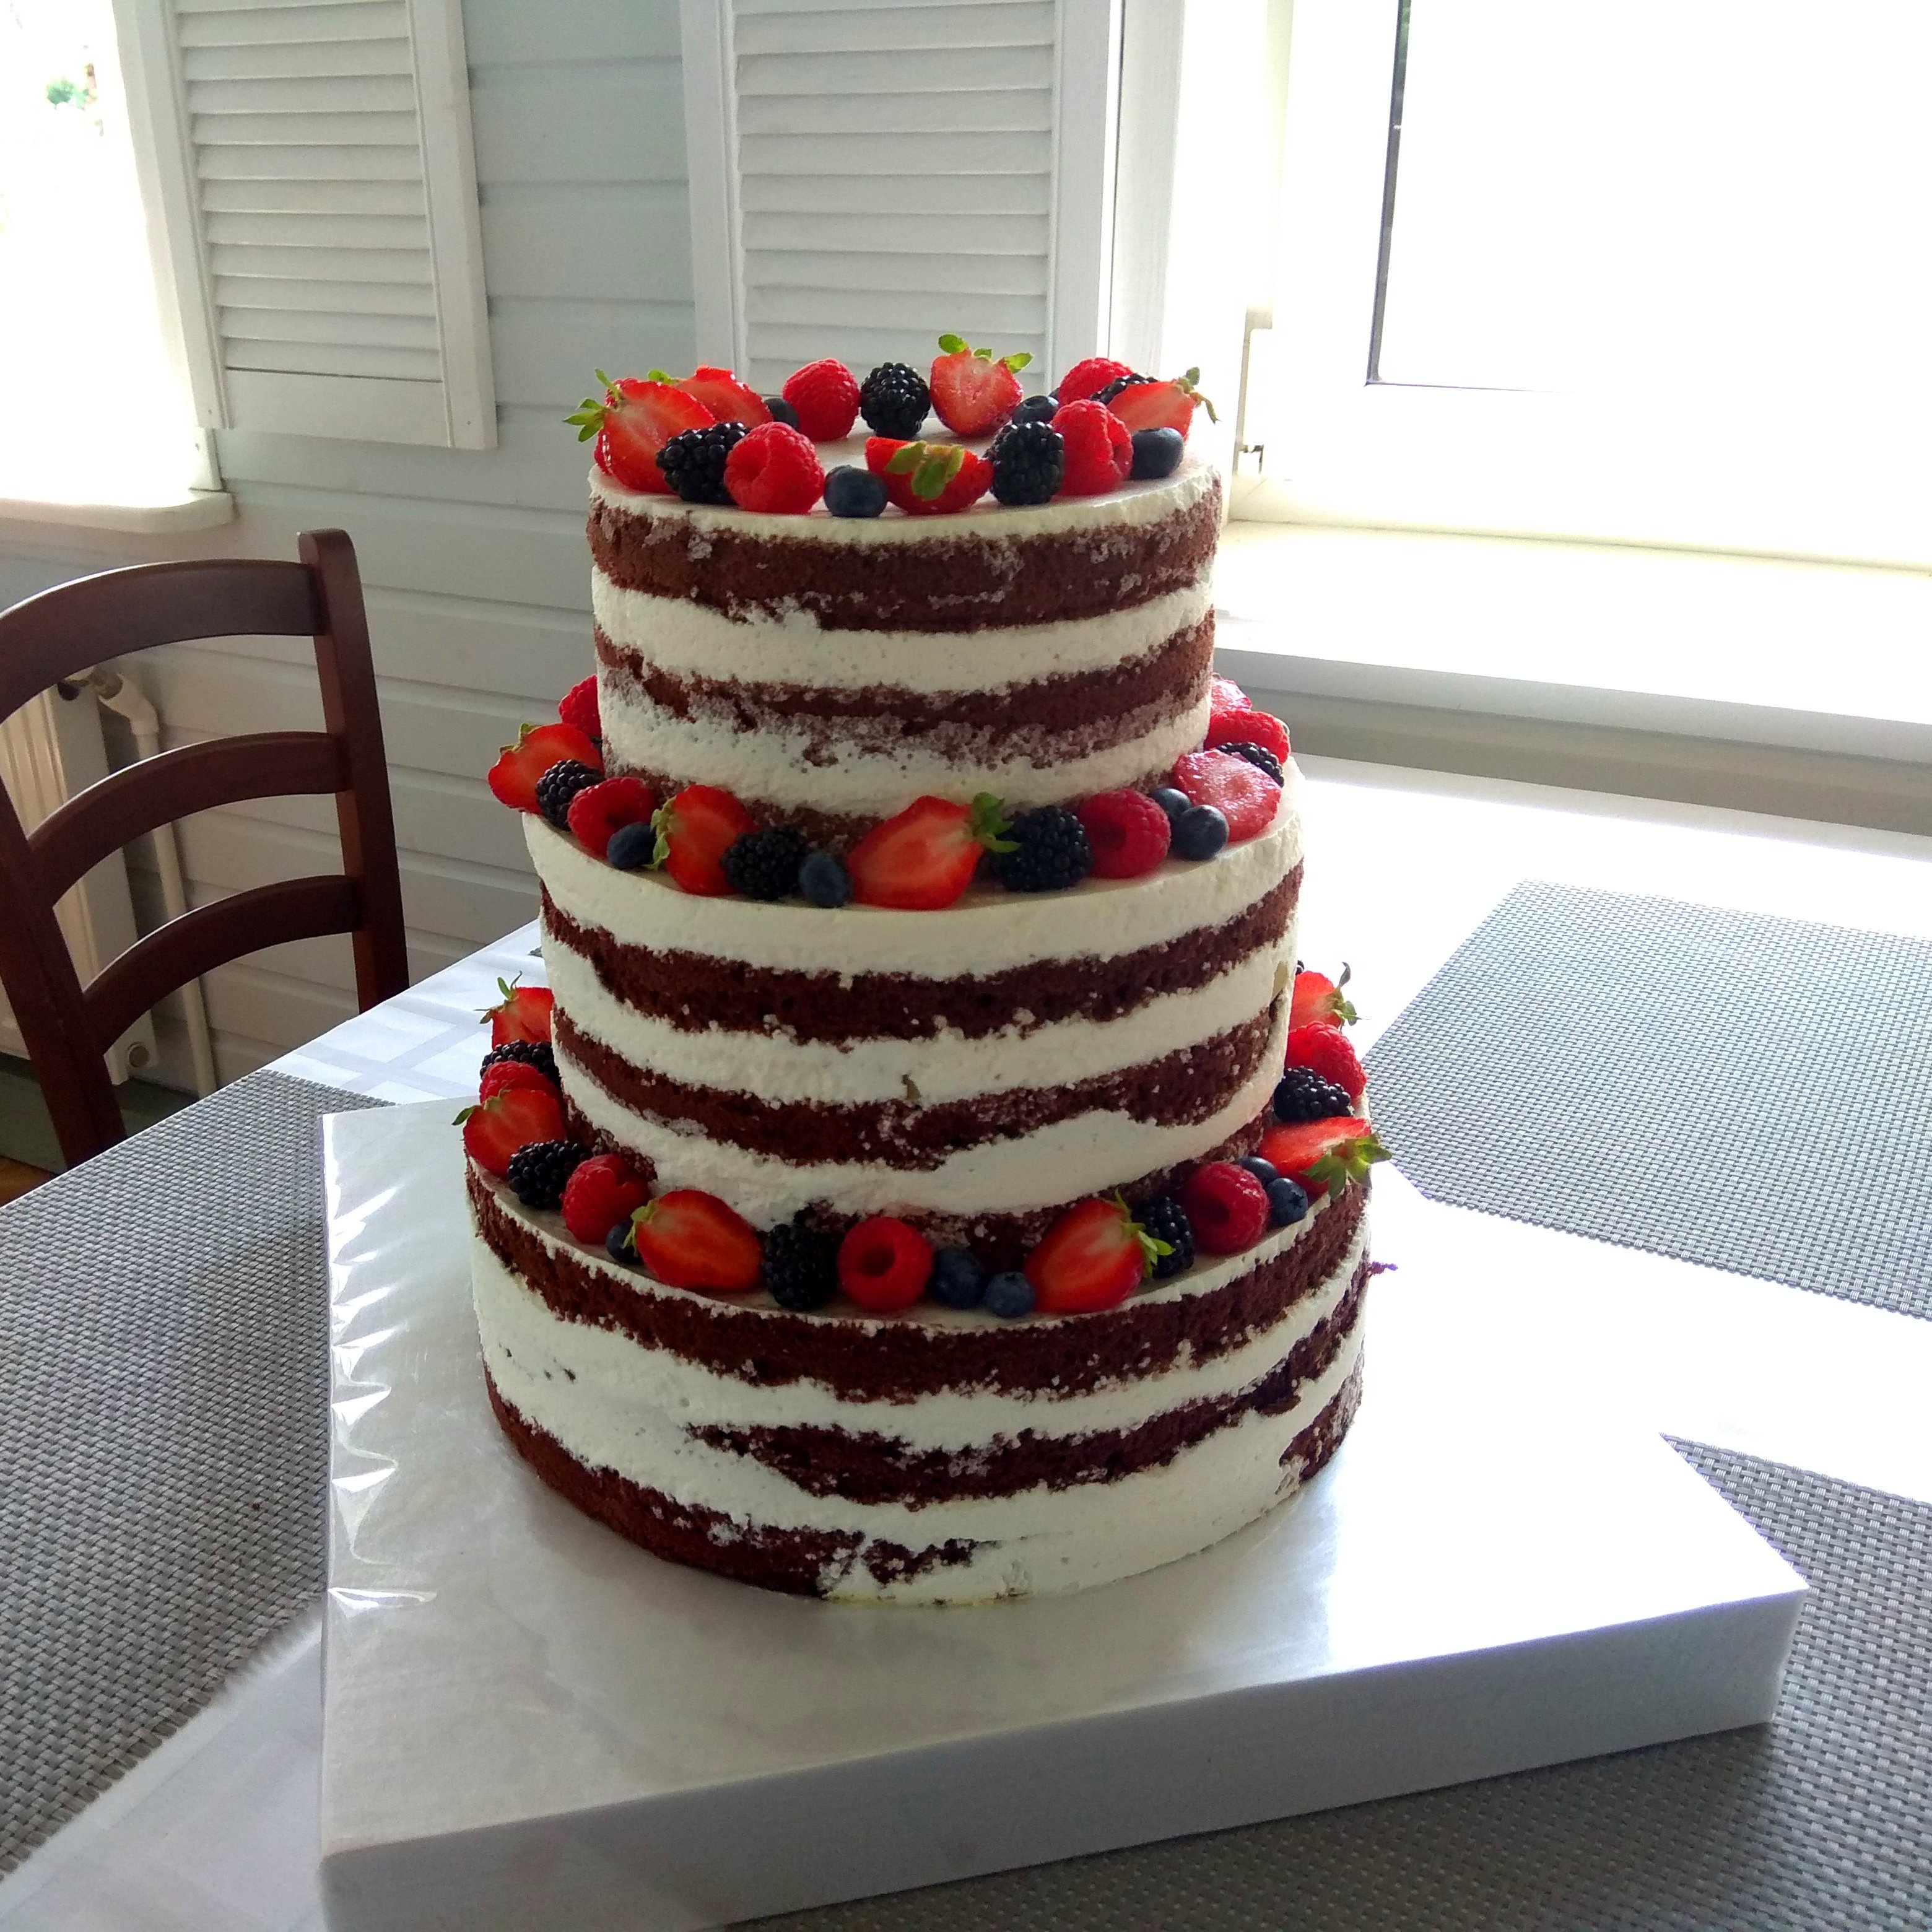 Фото трехъярусного. Трехъярусный торт. Многоуровневый торт. Многоярусный торт. Трехэтажный торт.